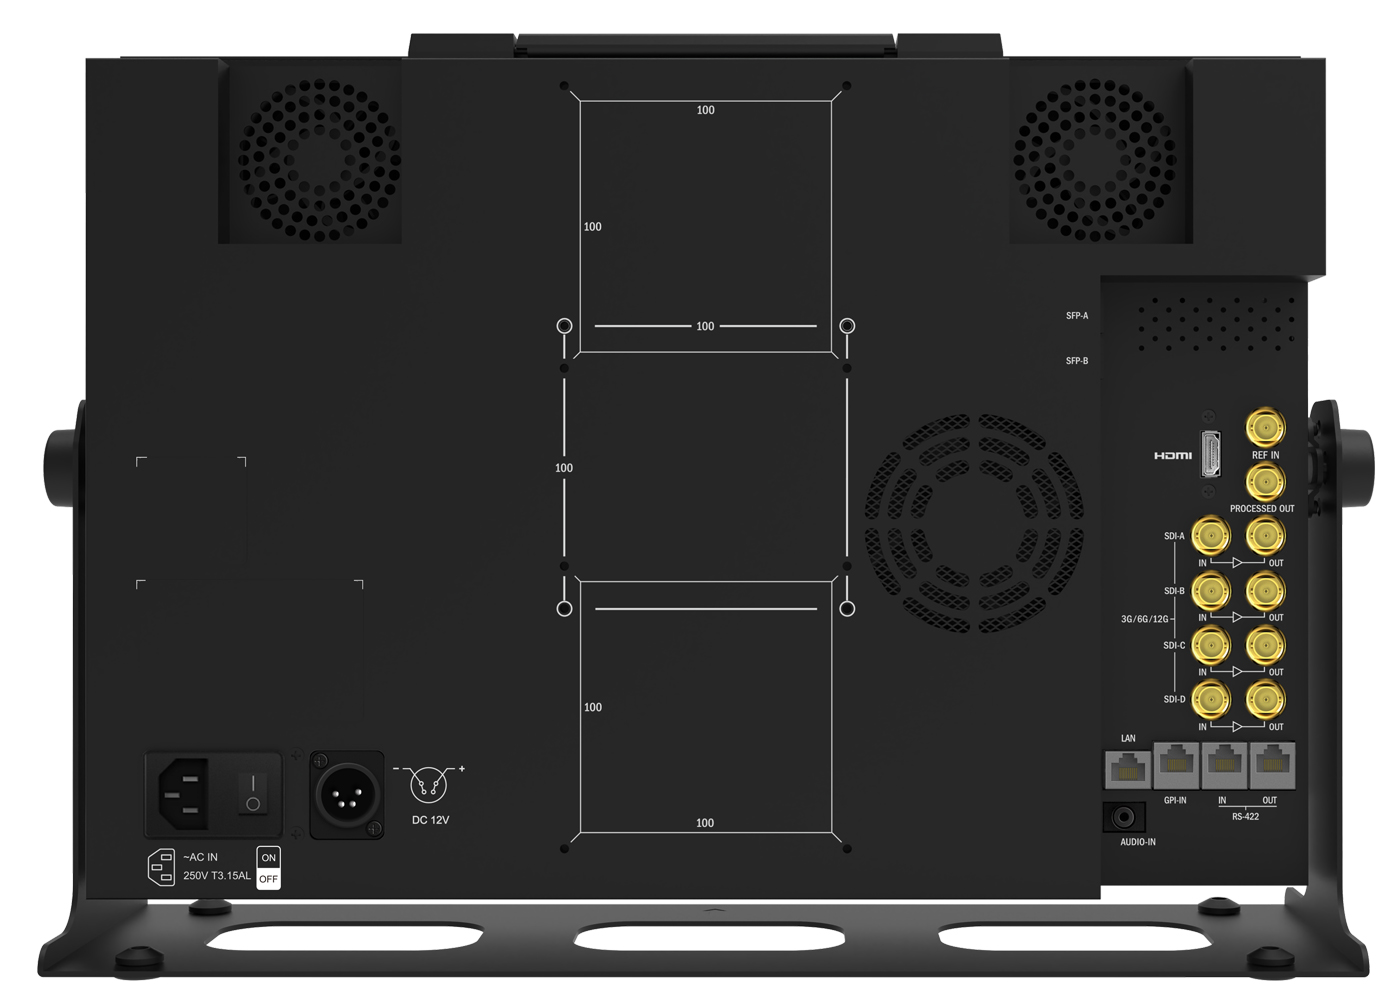 TVlogic LXM-180P 18.4" 4K/UHD HDR LCD Monitor with 1000Nits